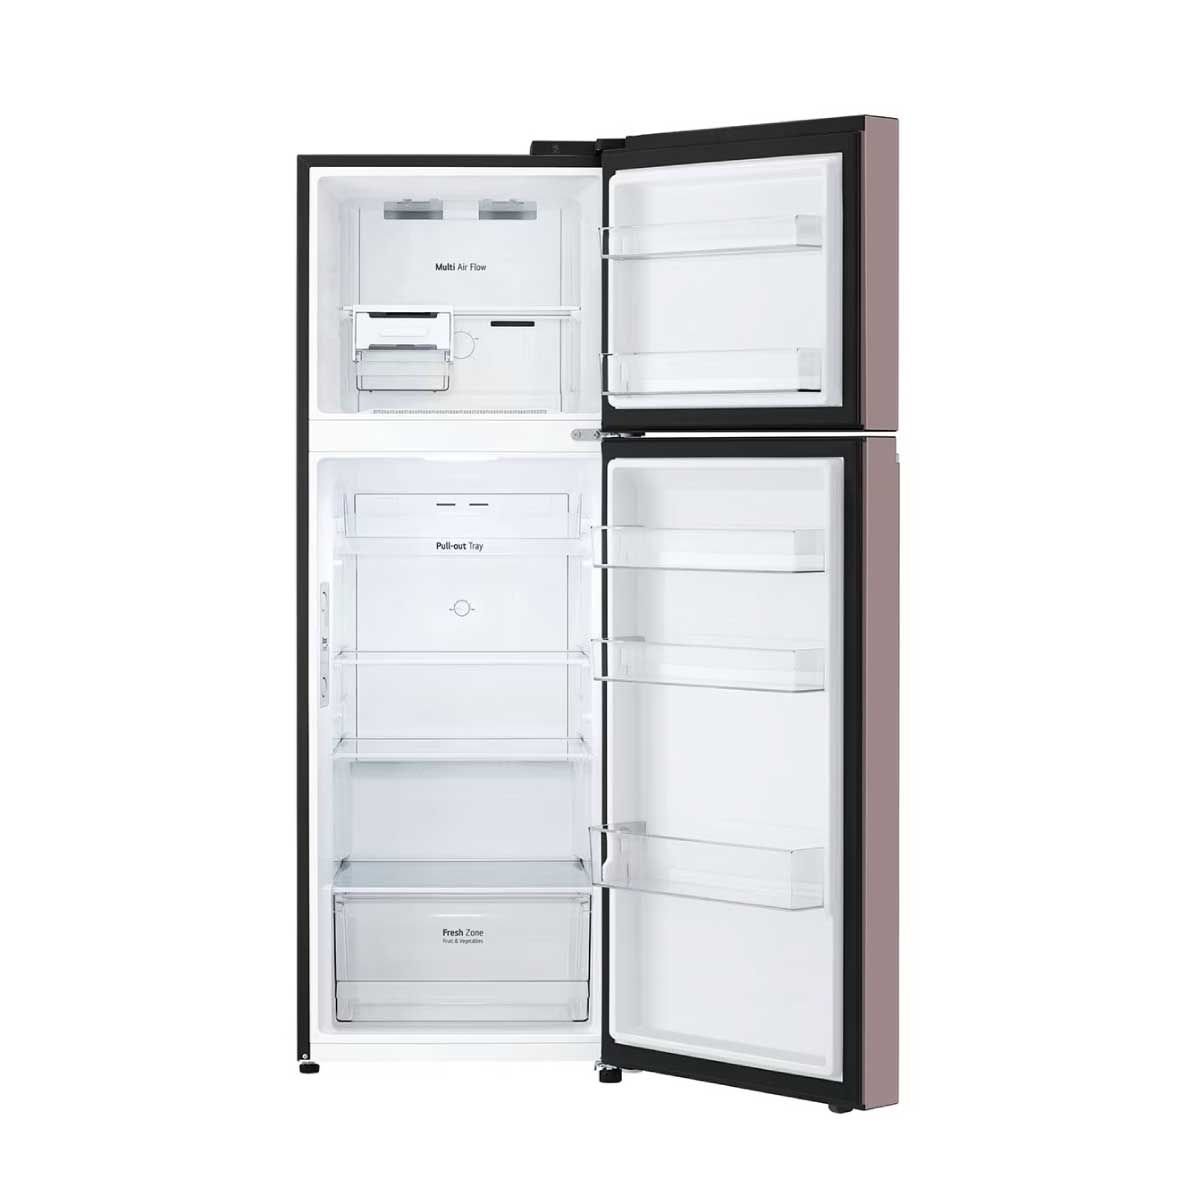 LG ตู้เย็น 2 ประตู Macaron Series รุ่น GN-X332PPGB สีชมพูพาสเทล ขนาด 11.8 คิว